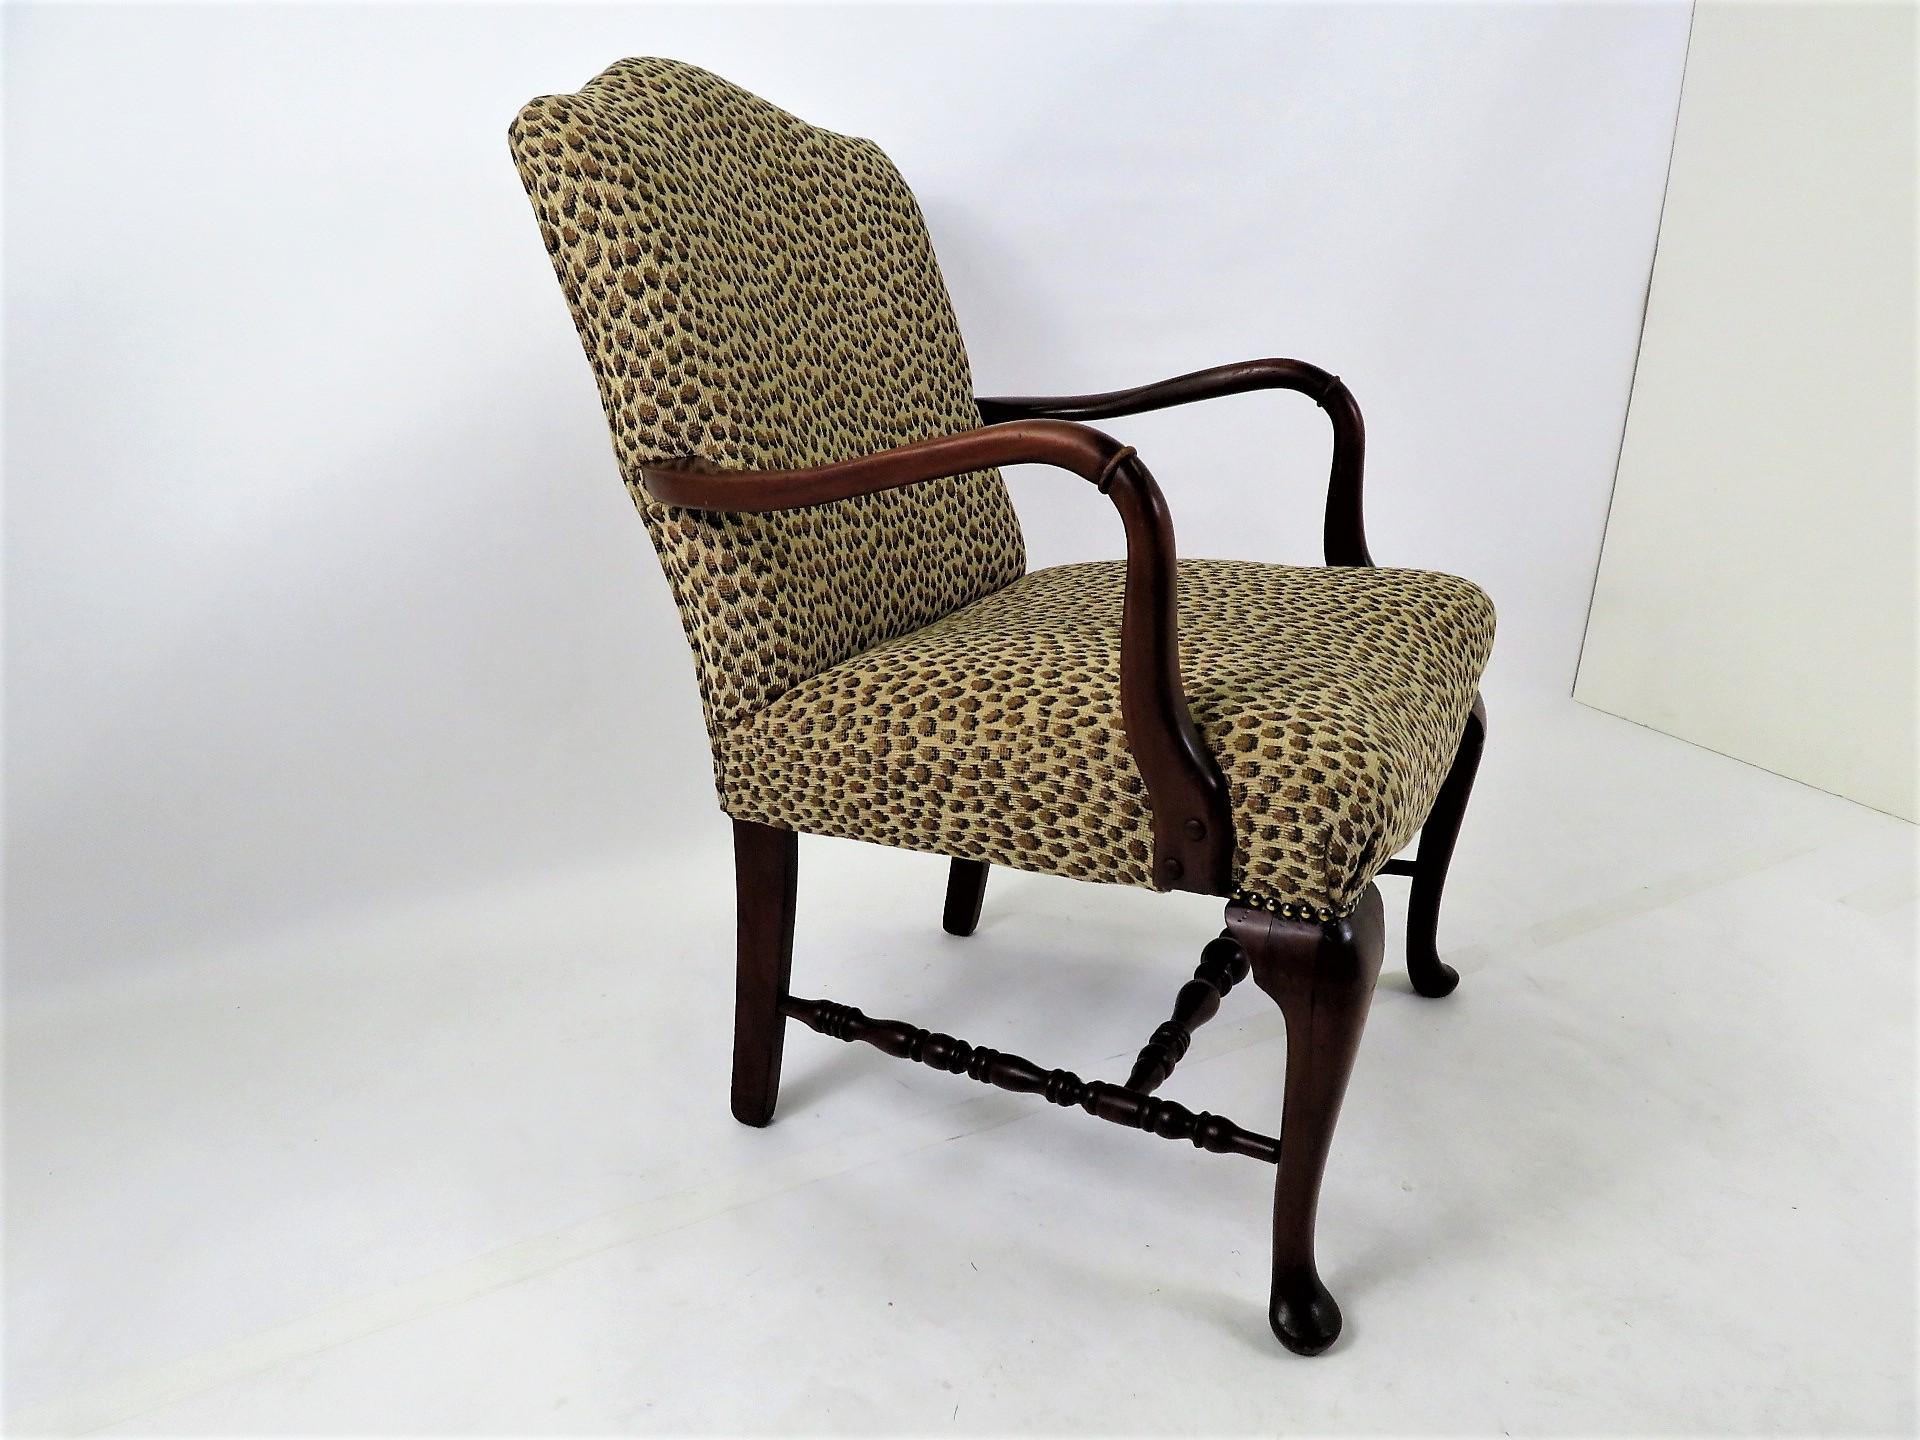 1940s armchair styles